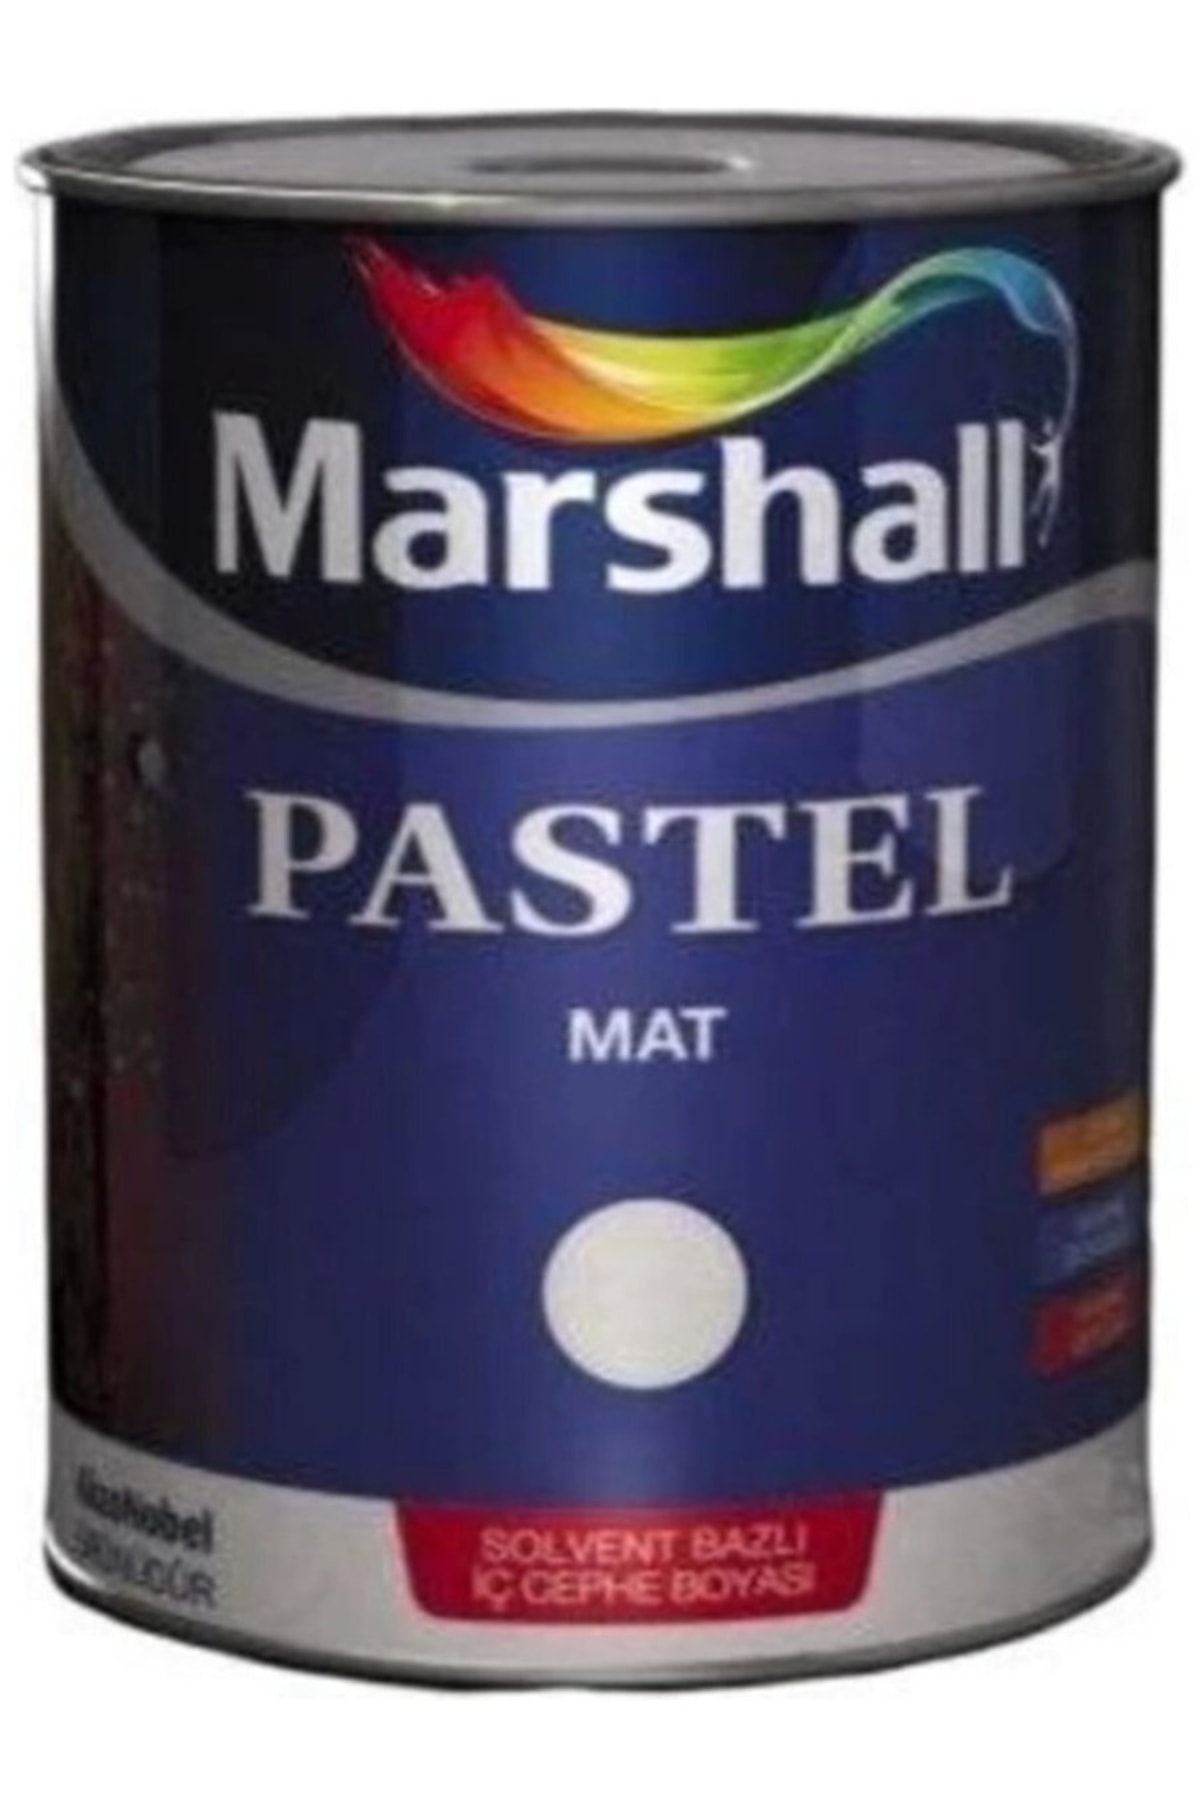 Marshall Pastel Mat Yağlı Boya 0,75 litre BEYAZ